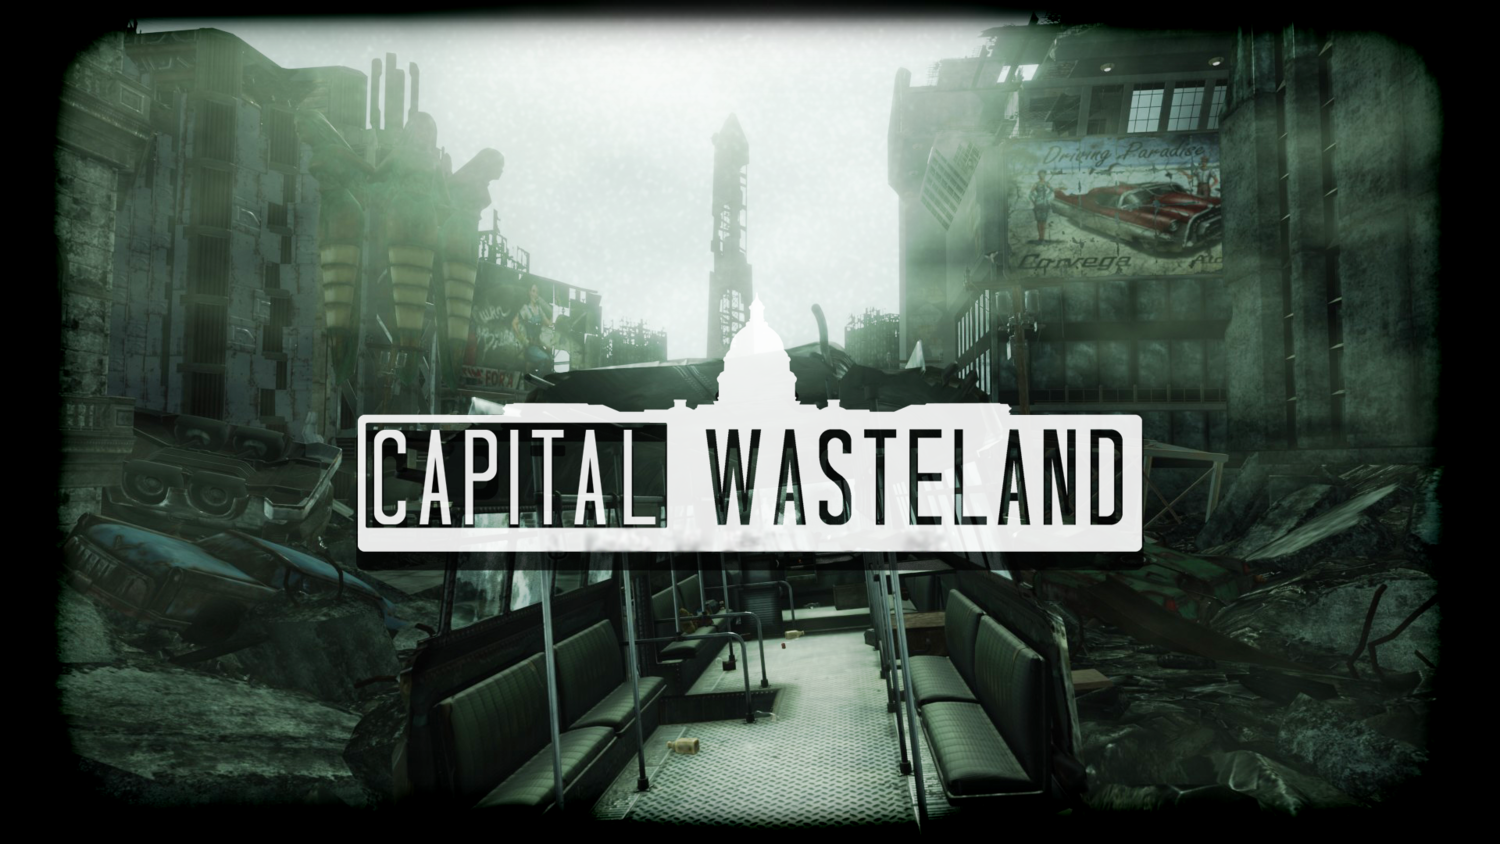 capitalwasteland.com